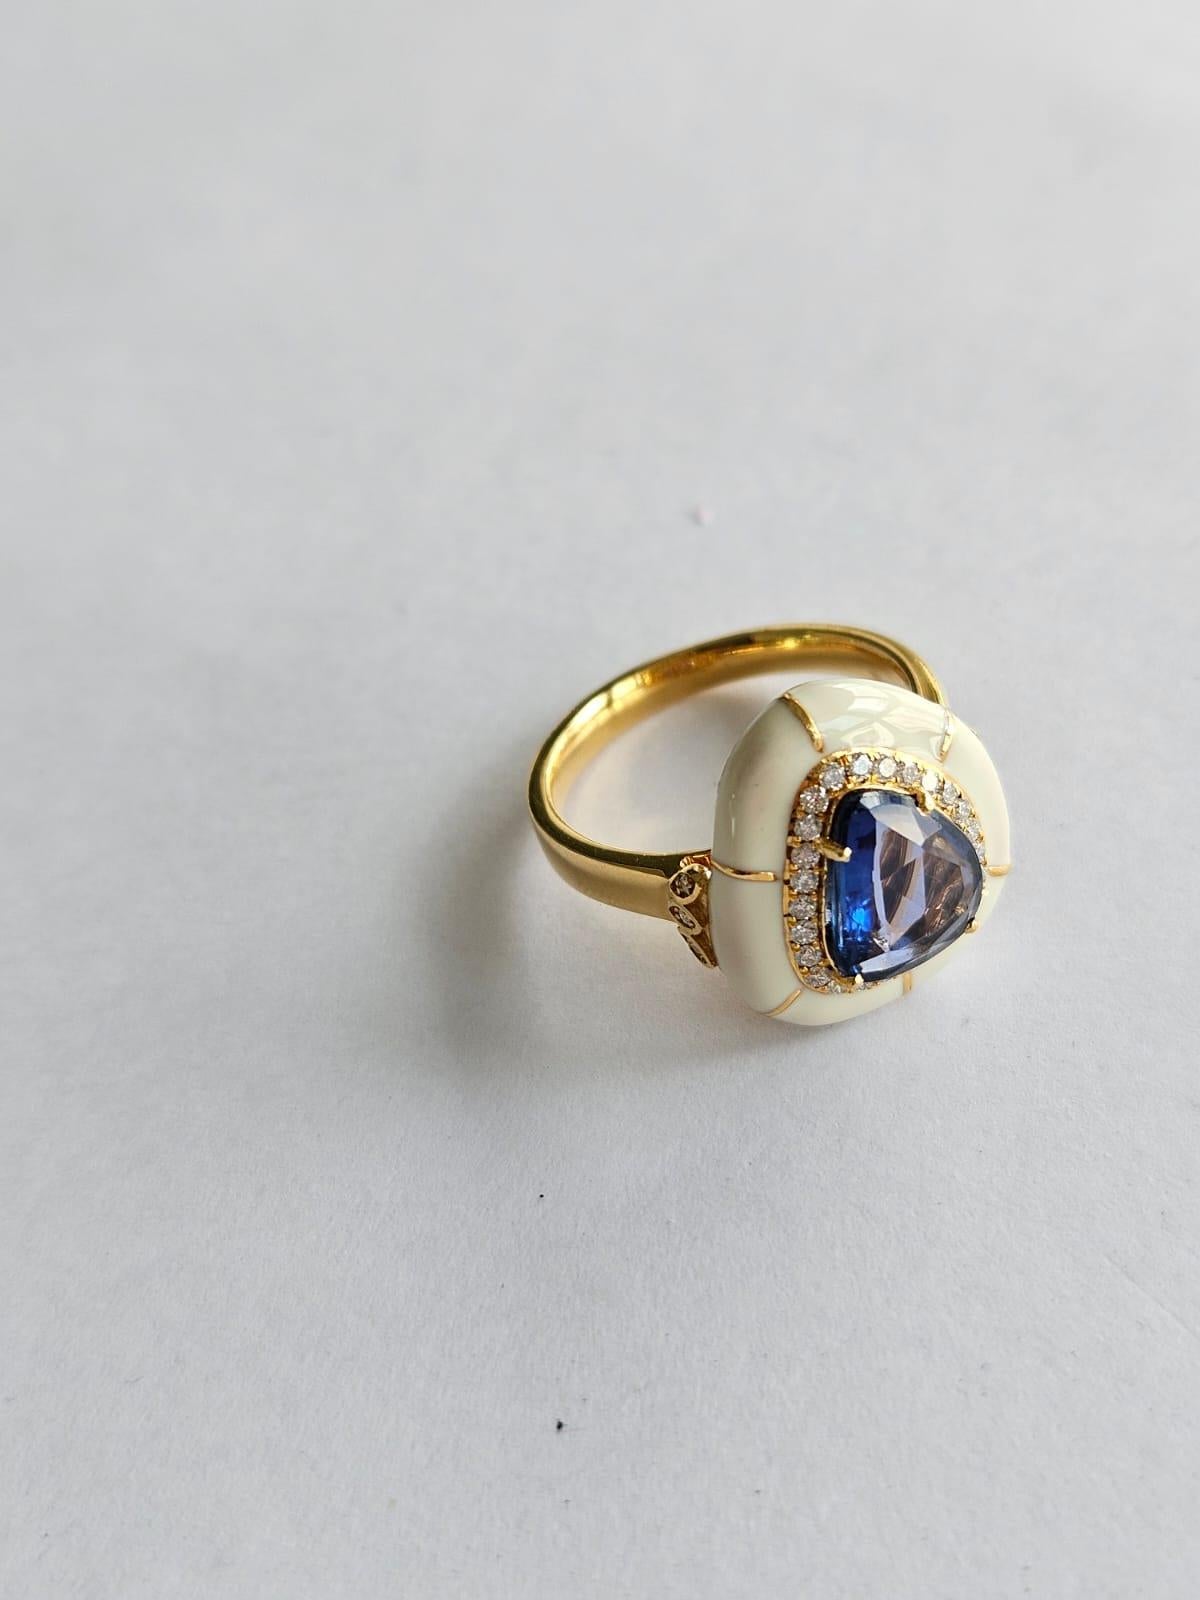 Rose Cut Set in 18K Gold, Ceylon Blue Sapphire, White Enamel & Diamonds Engagement Ring